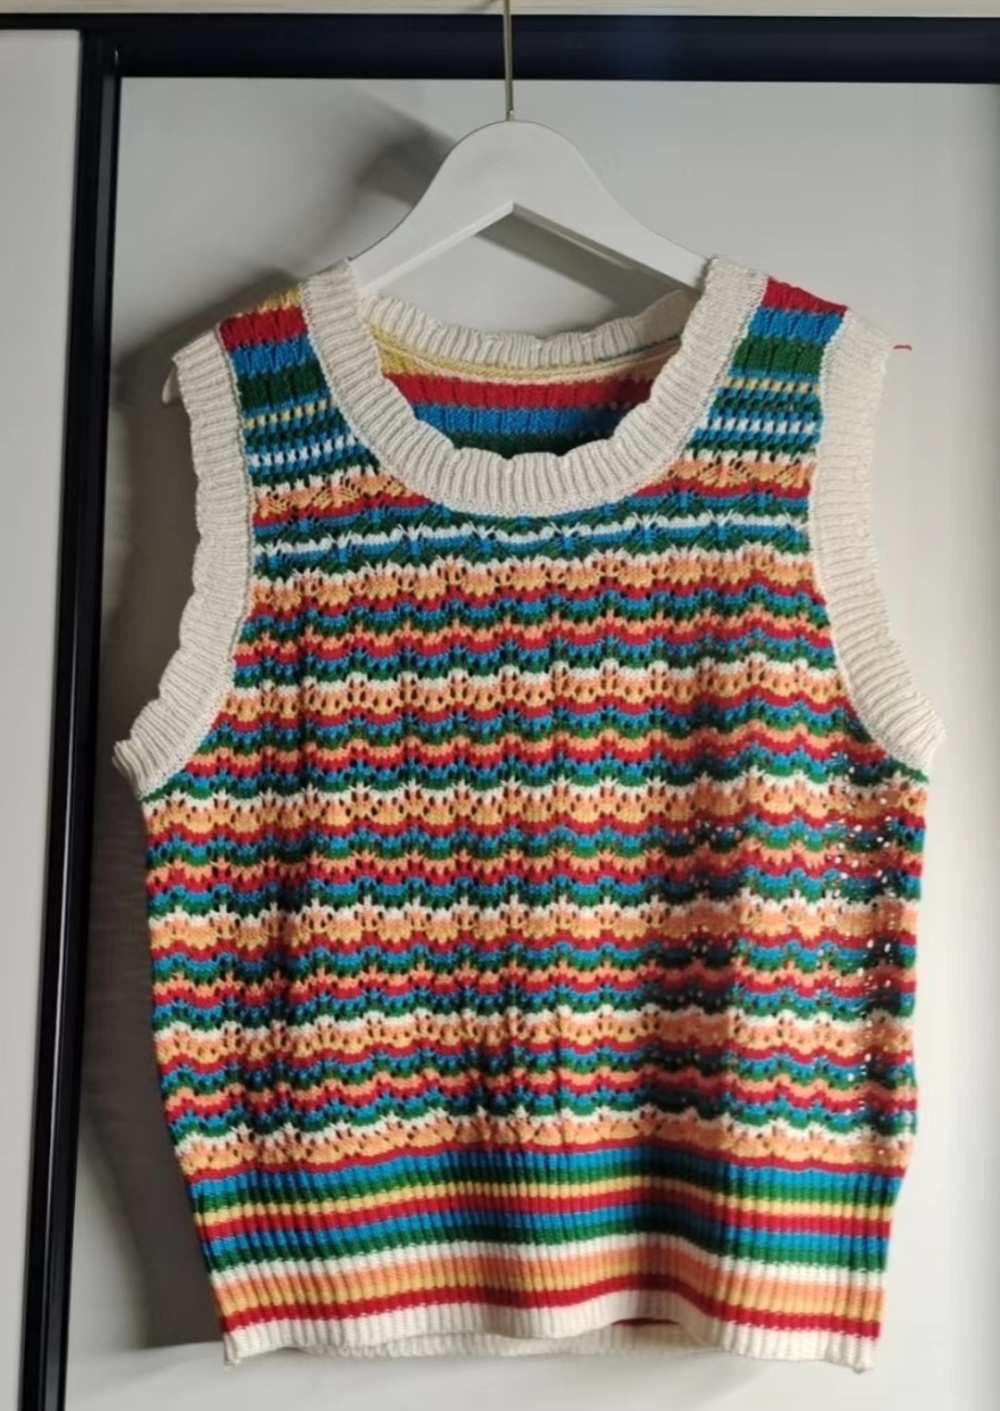 Summer hollow vest knitted stripe T-shirt for women